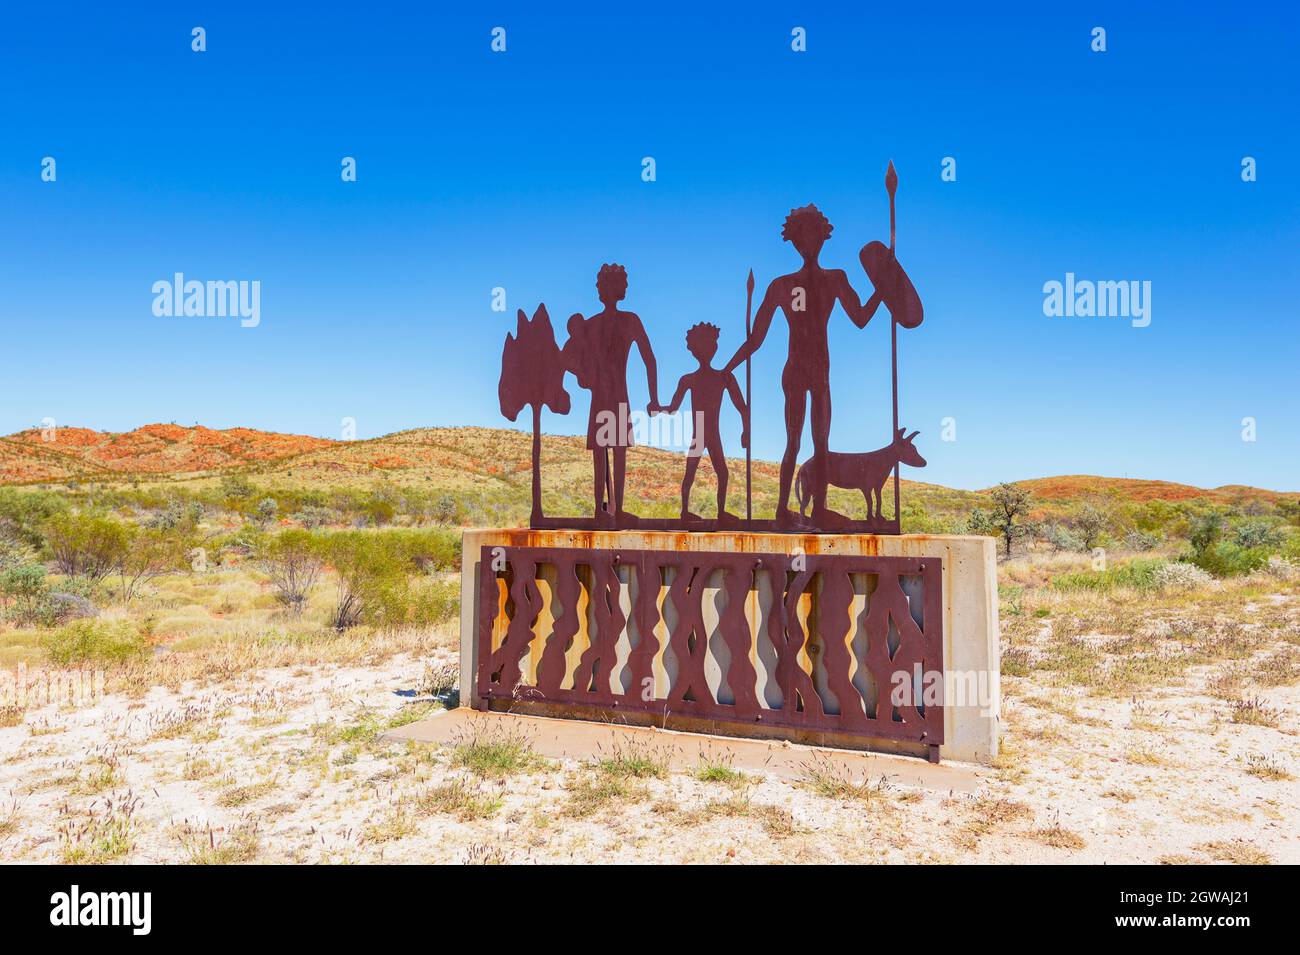 Roadside metal artwork representing an Aboriginal family, Marble Bar, Pilbara, Western Australia, Australia Stock Photo